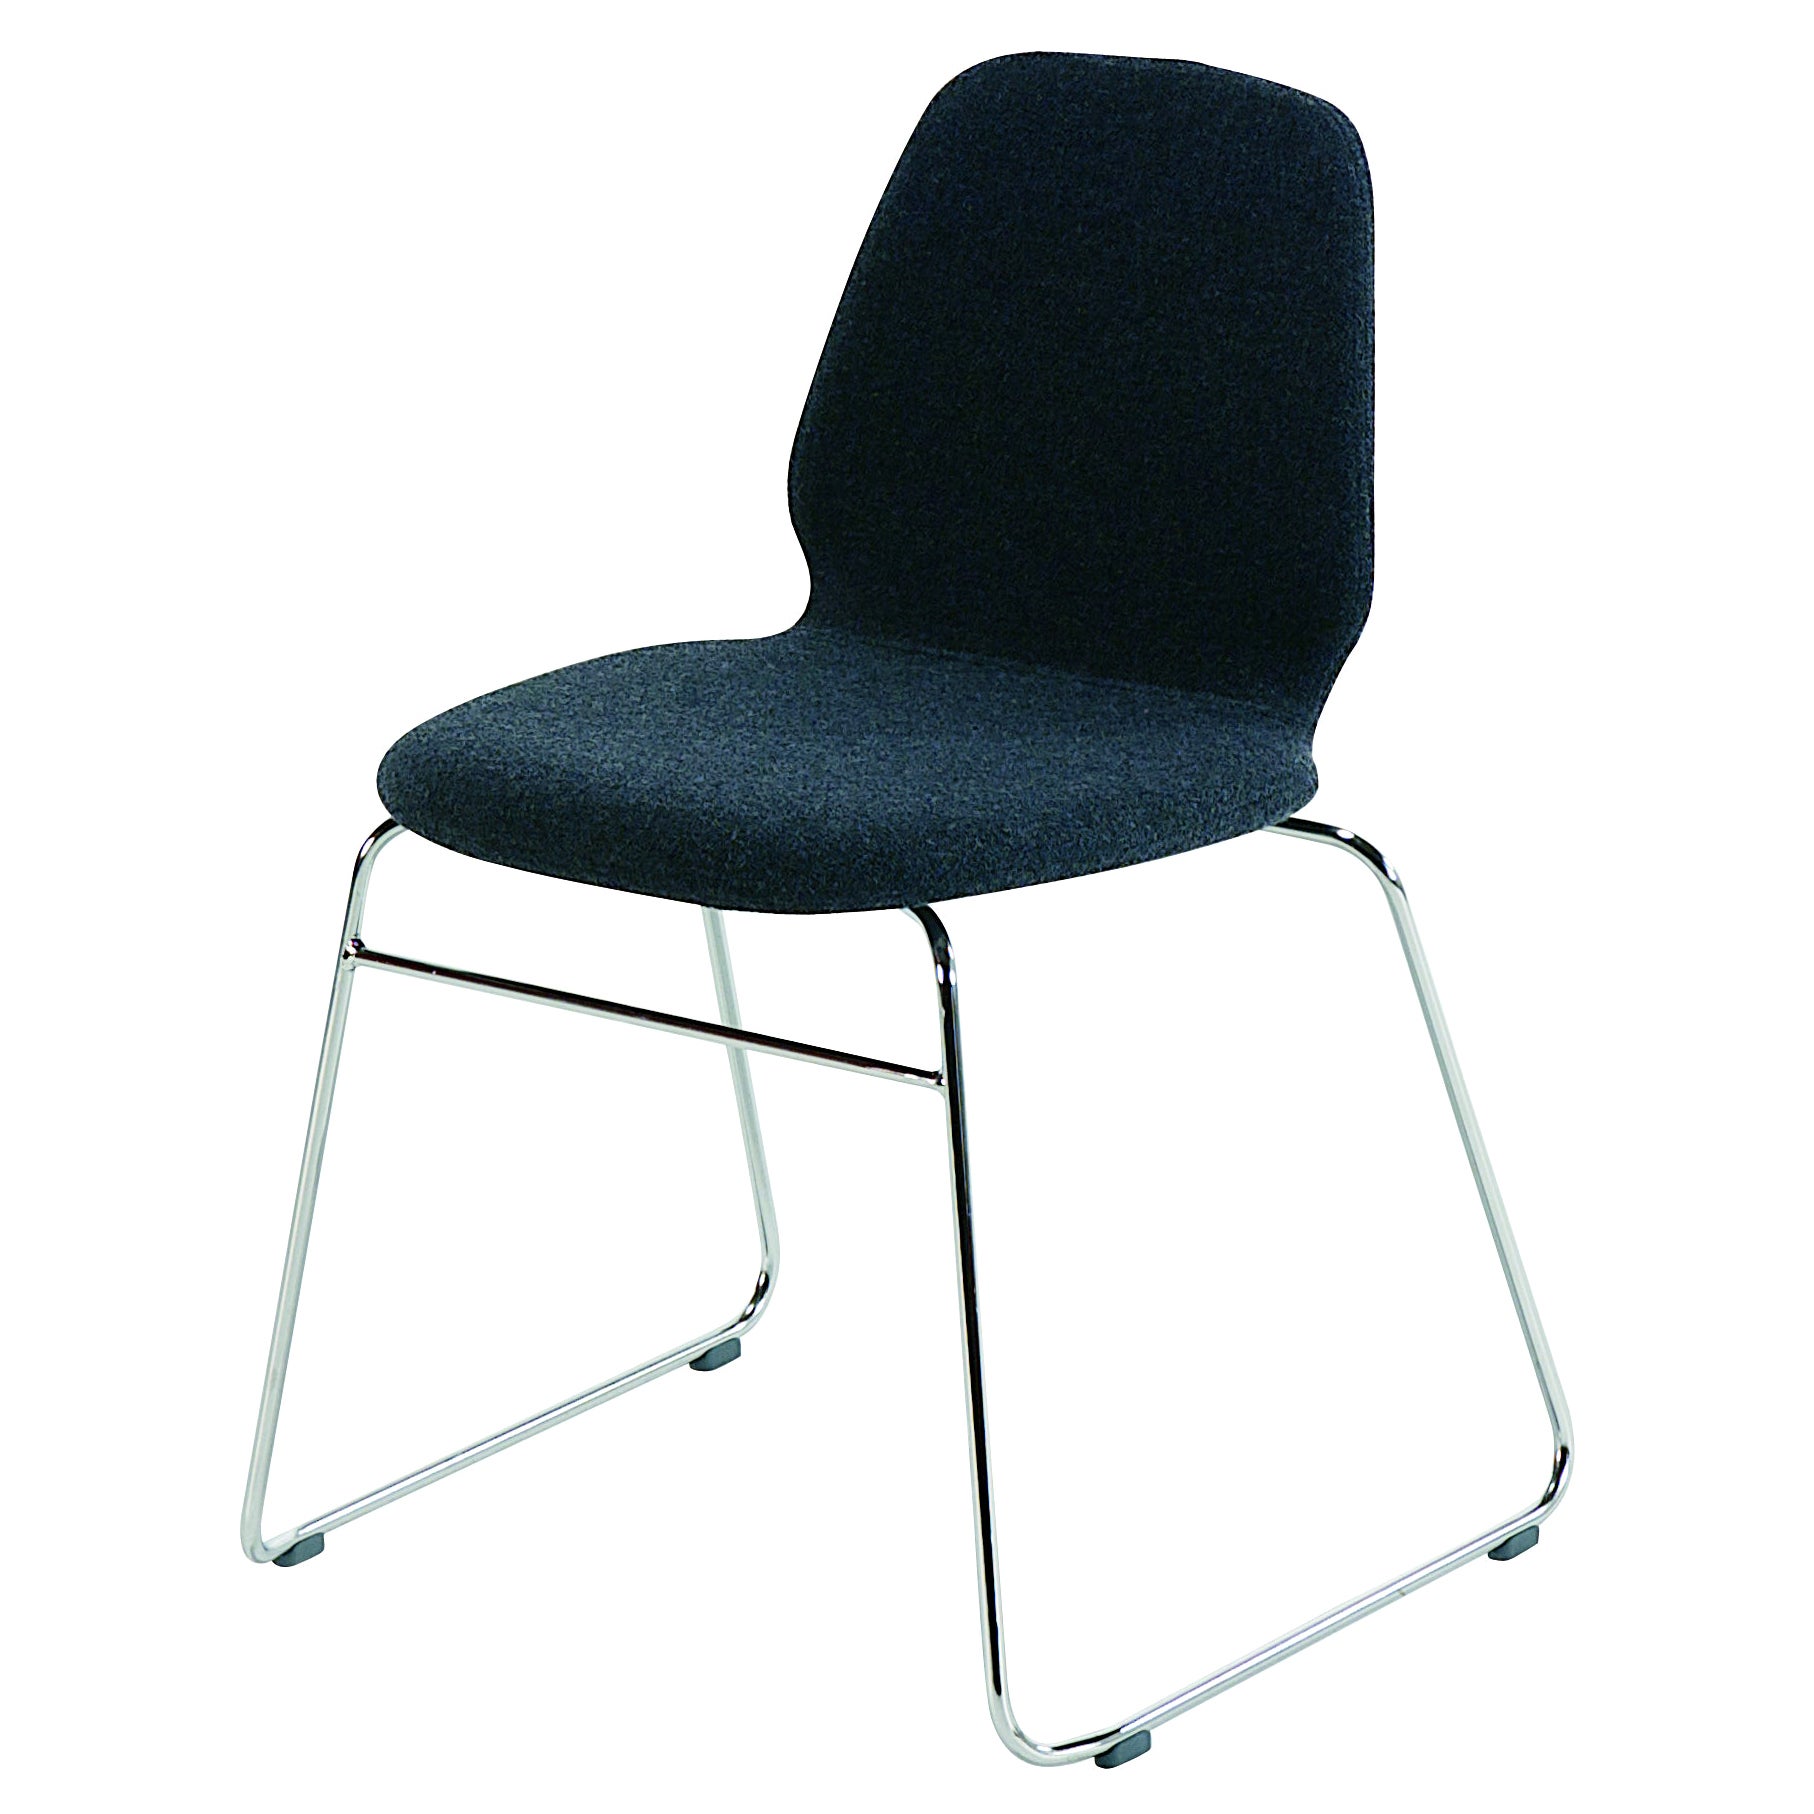 Alias 517 Tindari Sledge Chair in Black Seat with Chromed Steel Frame For Sale